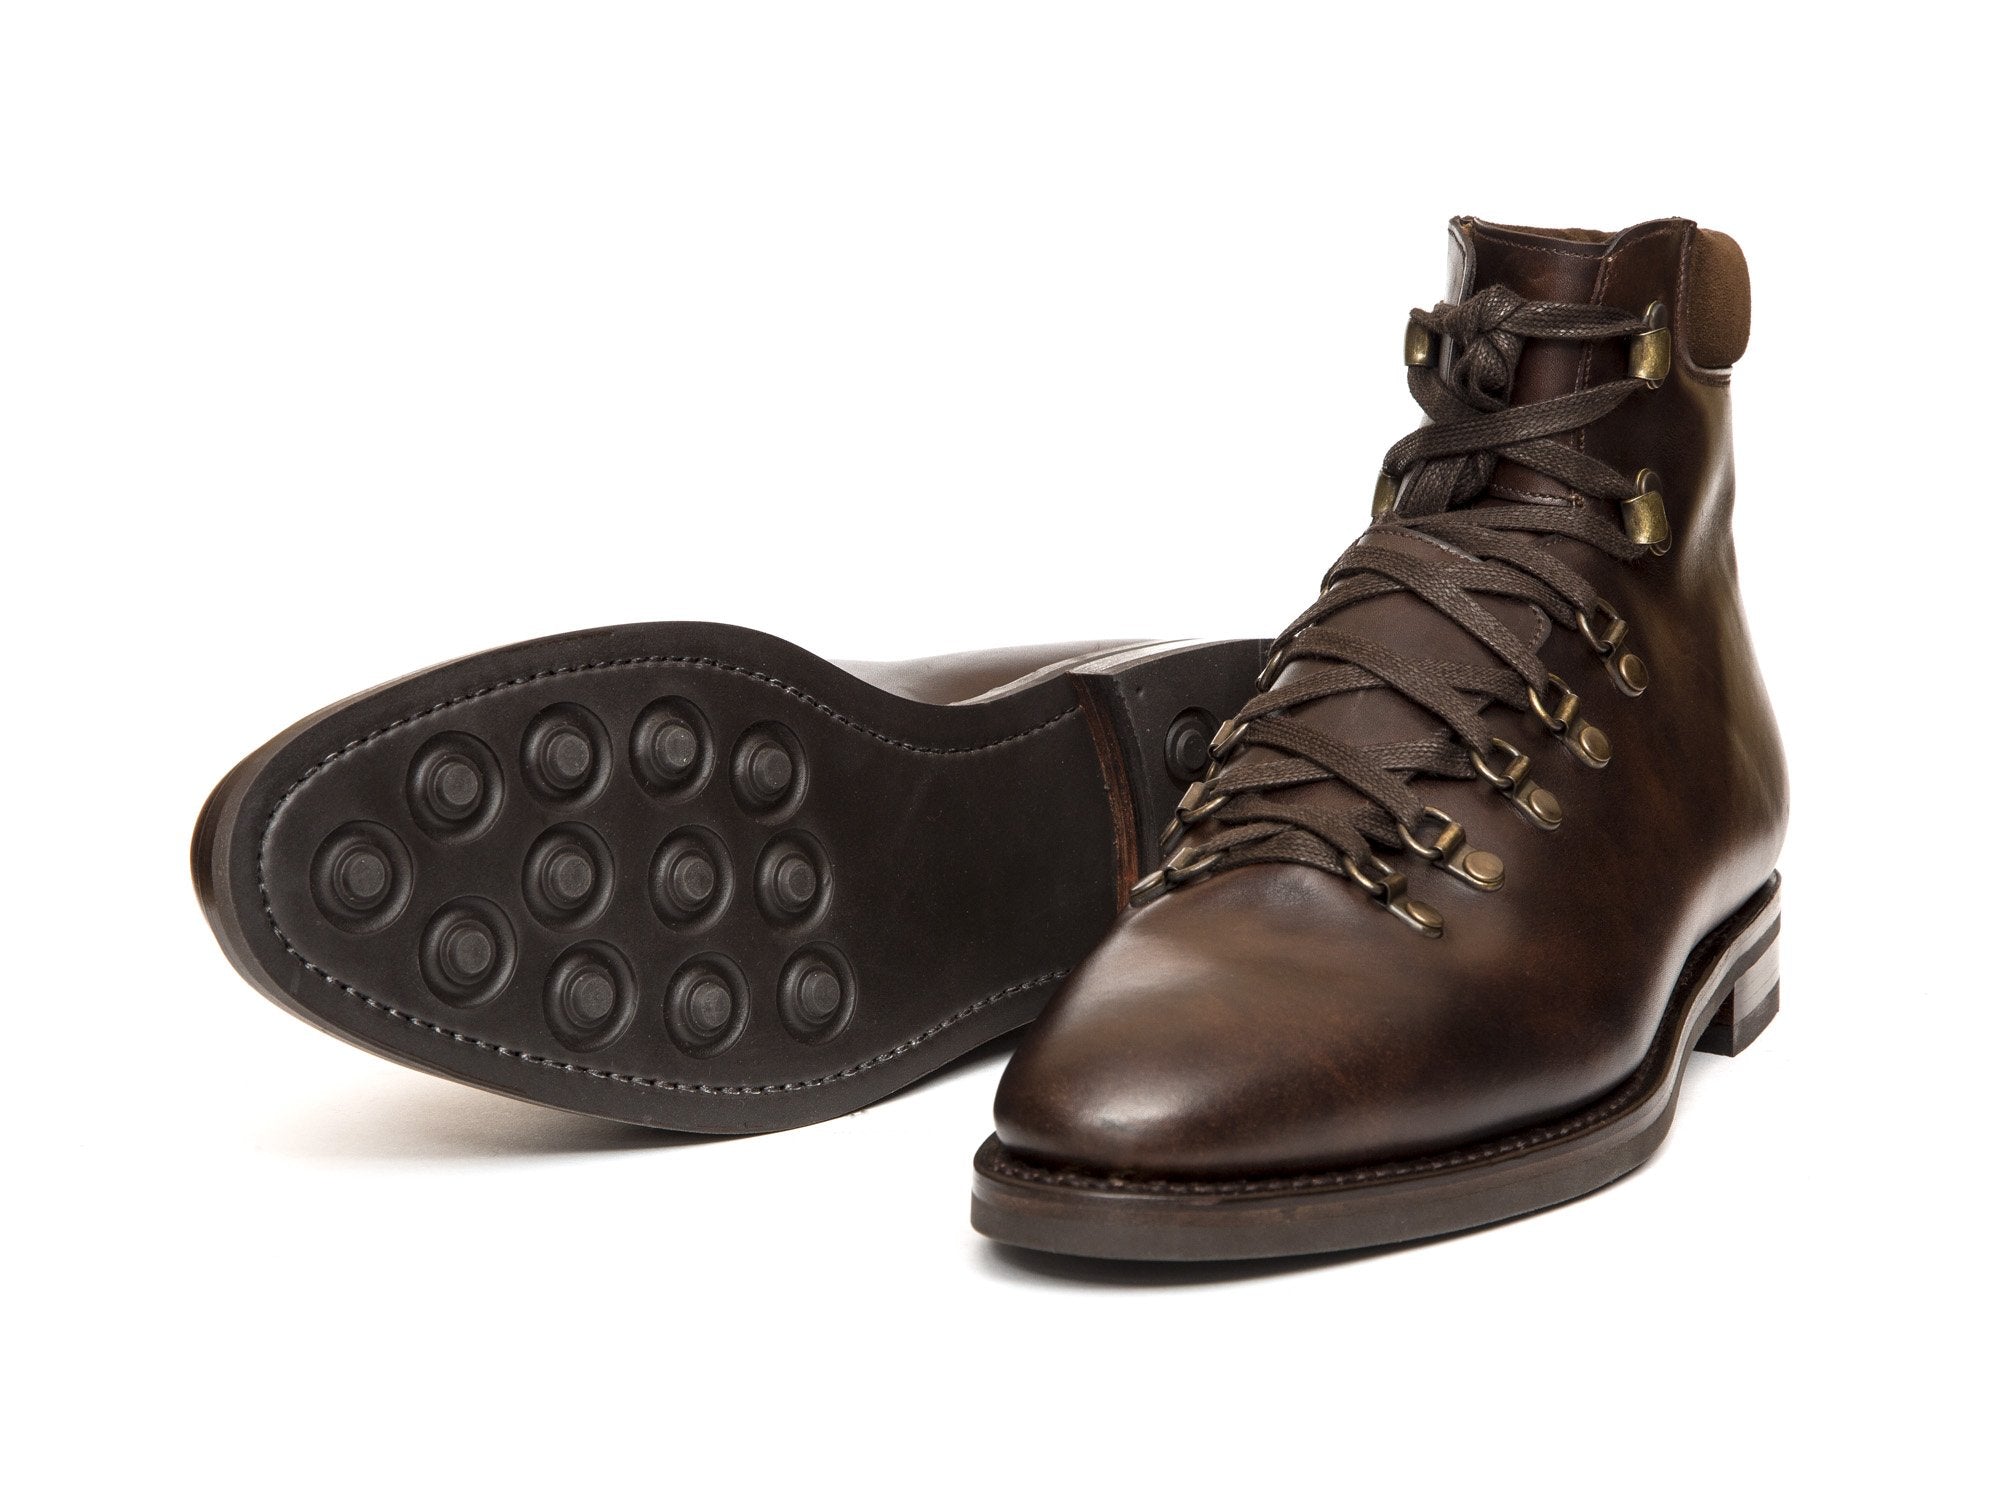 J.FitzPatrick Footwear - Snoqualmie - Dark Brown Museum Calf - City Rubber Sole - TMG Last